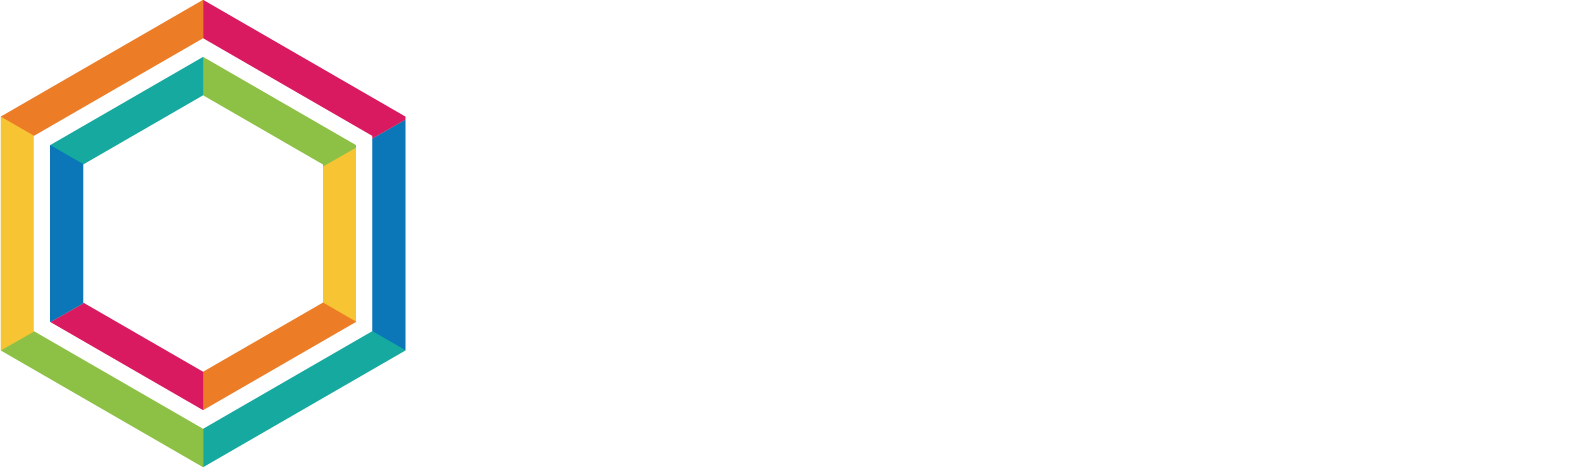 Light Fun Games